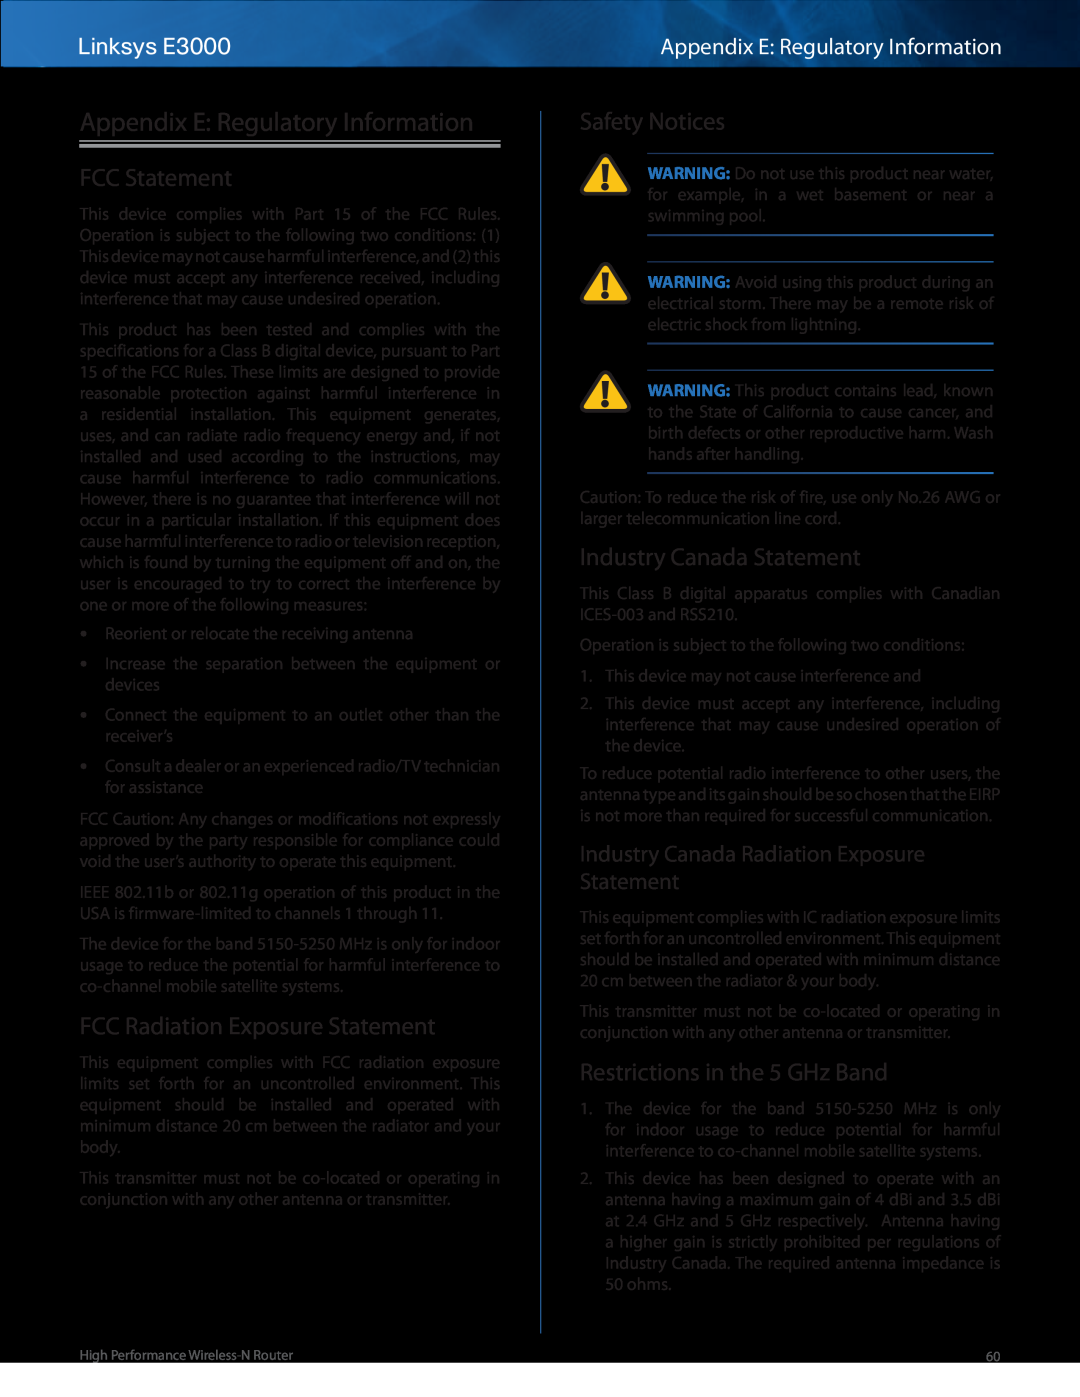 Linksys E3000 manual Appendix E Regulatory Information, FCC Statement, FCC Radiation Exposure Statement, Safety Notices 